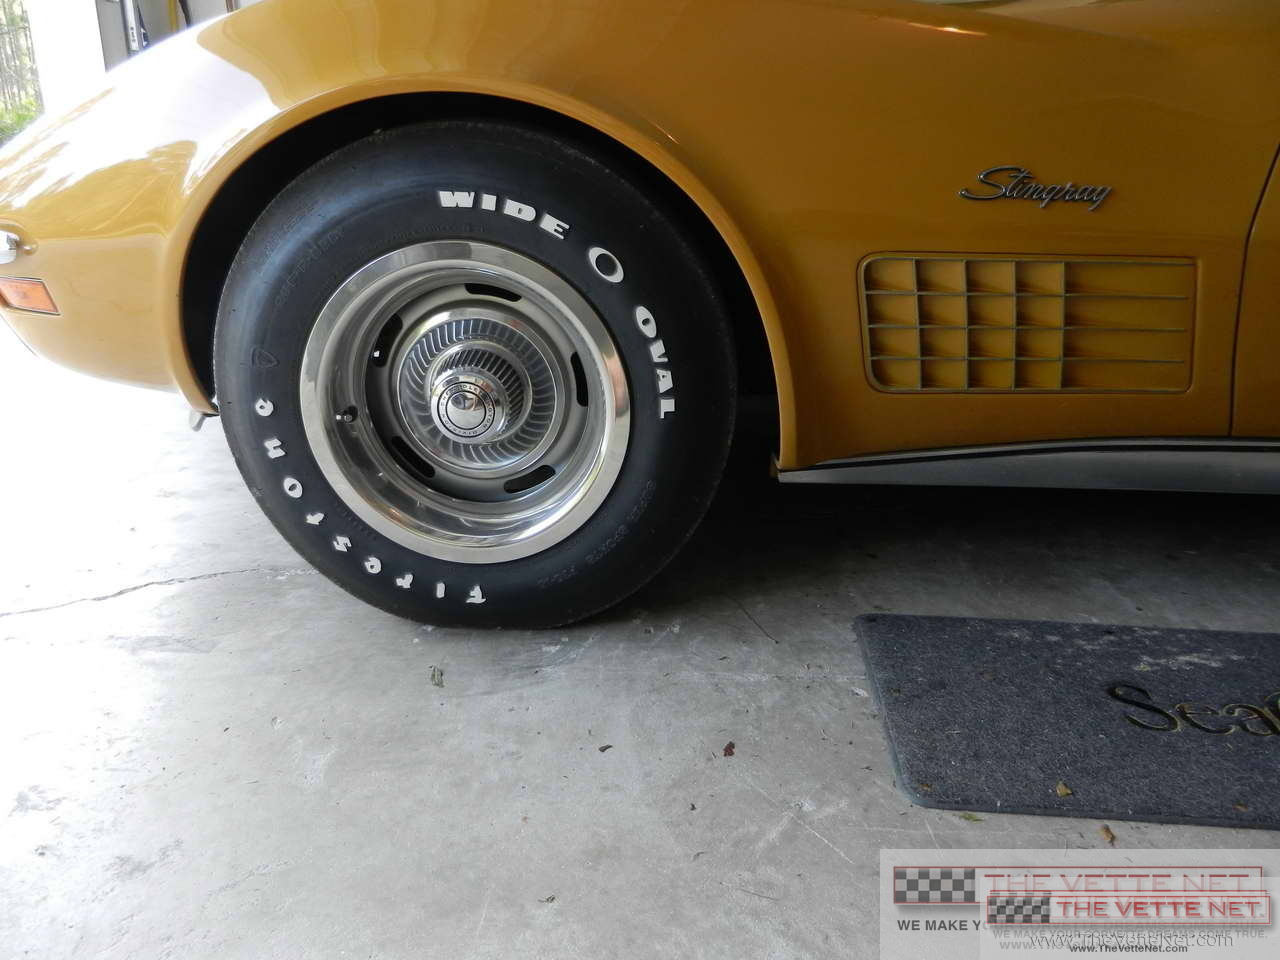 1972 Corvette T-Top Warbonnet Yellow